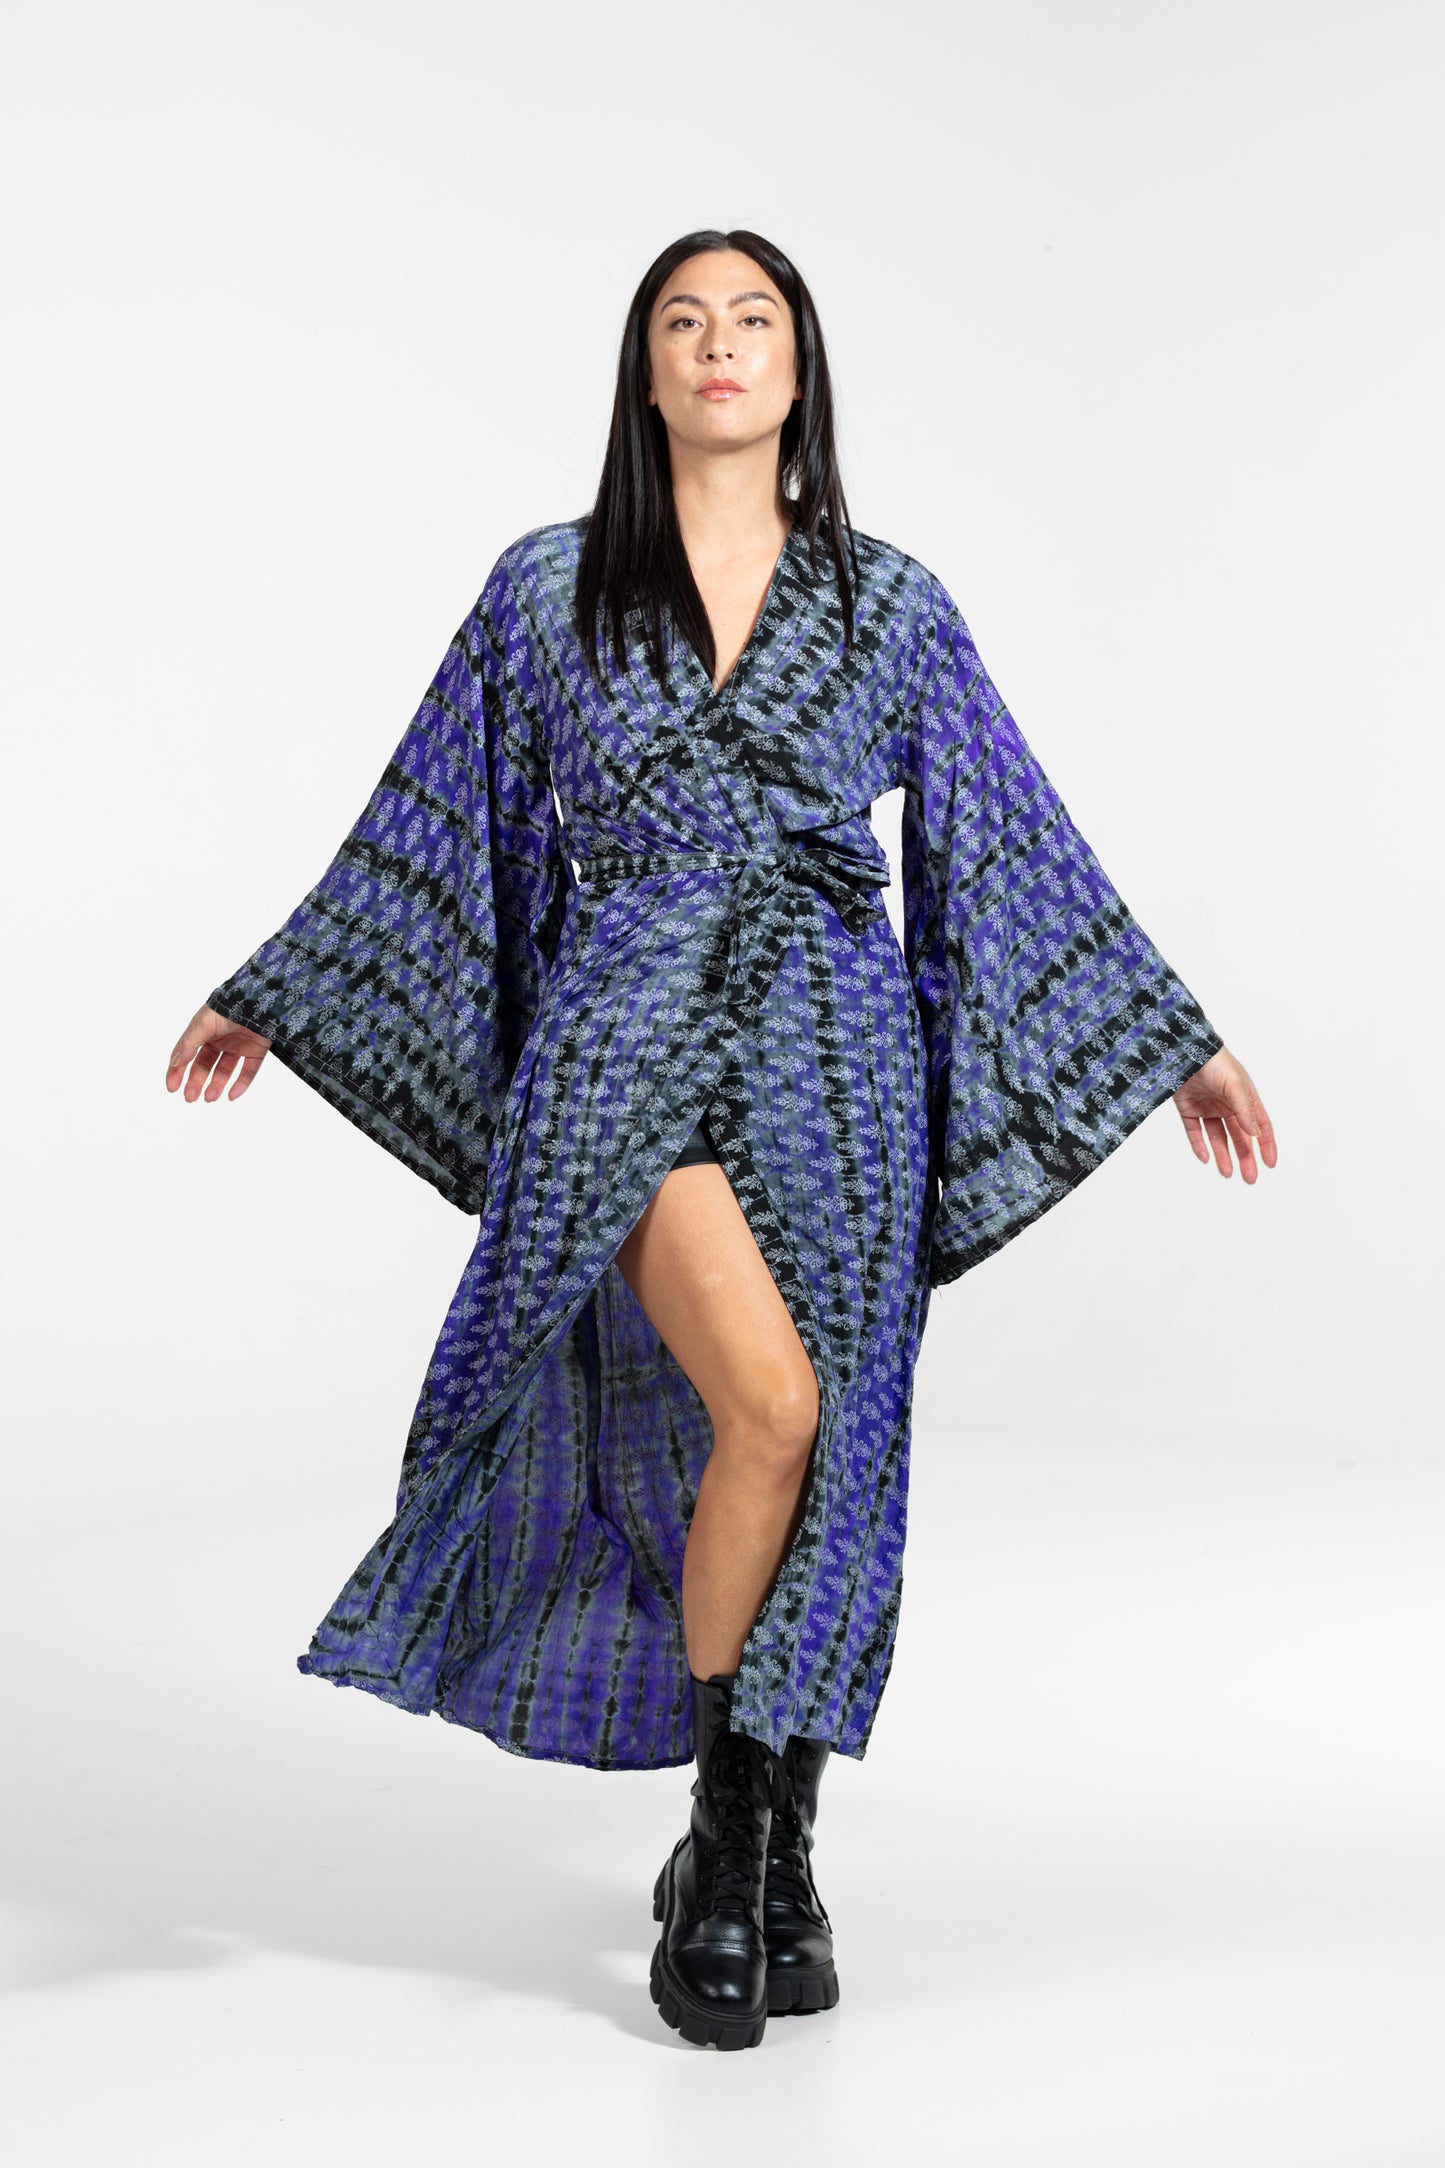 Devi Kimono gemustert lila-grau-schwarz